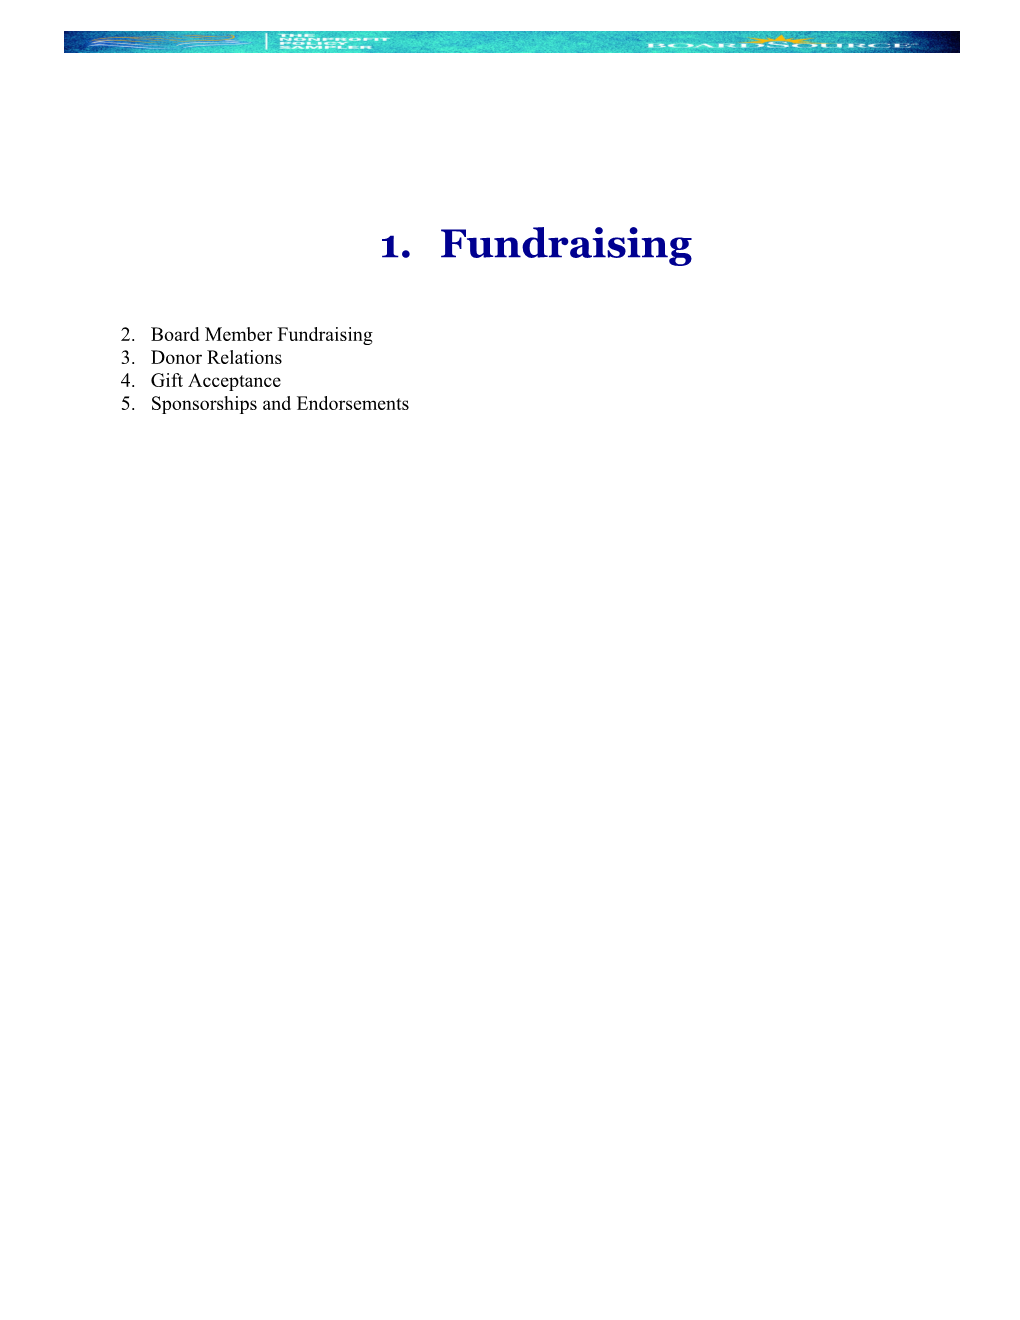 Board Member Fundraising Policies